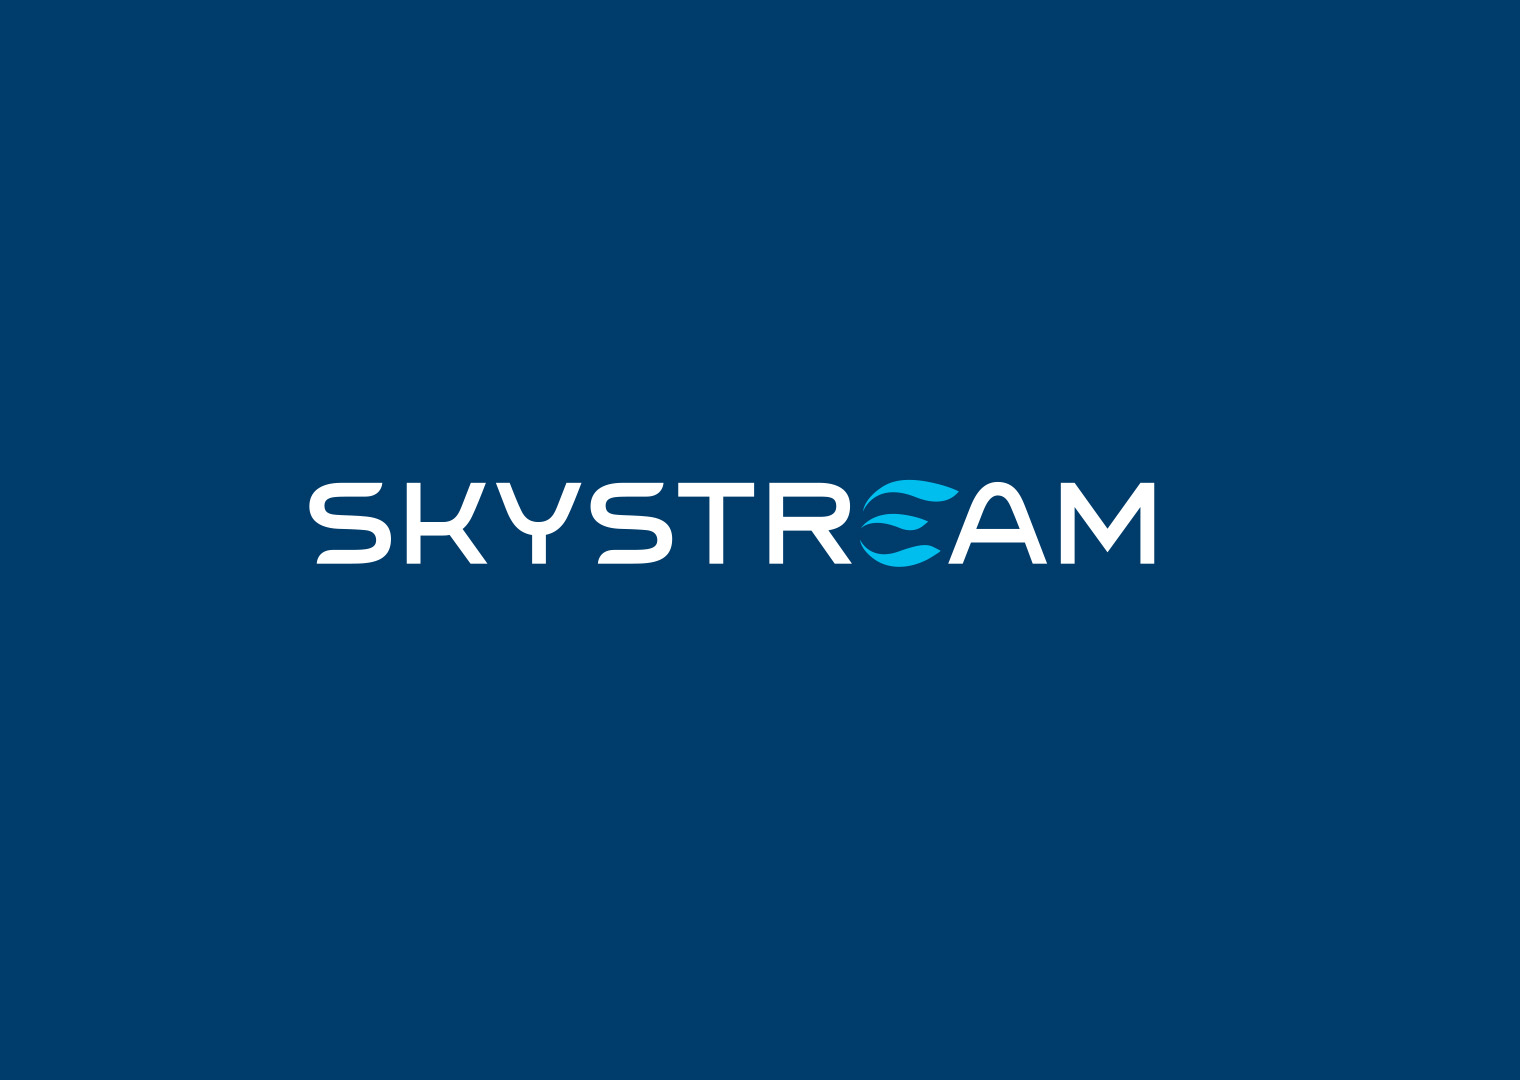 Skystream logo